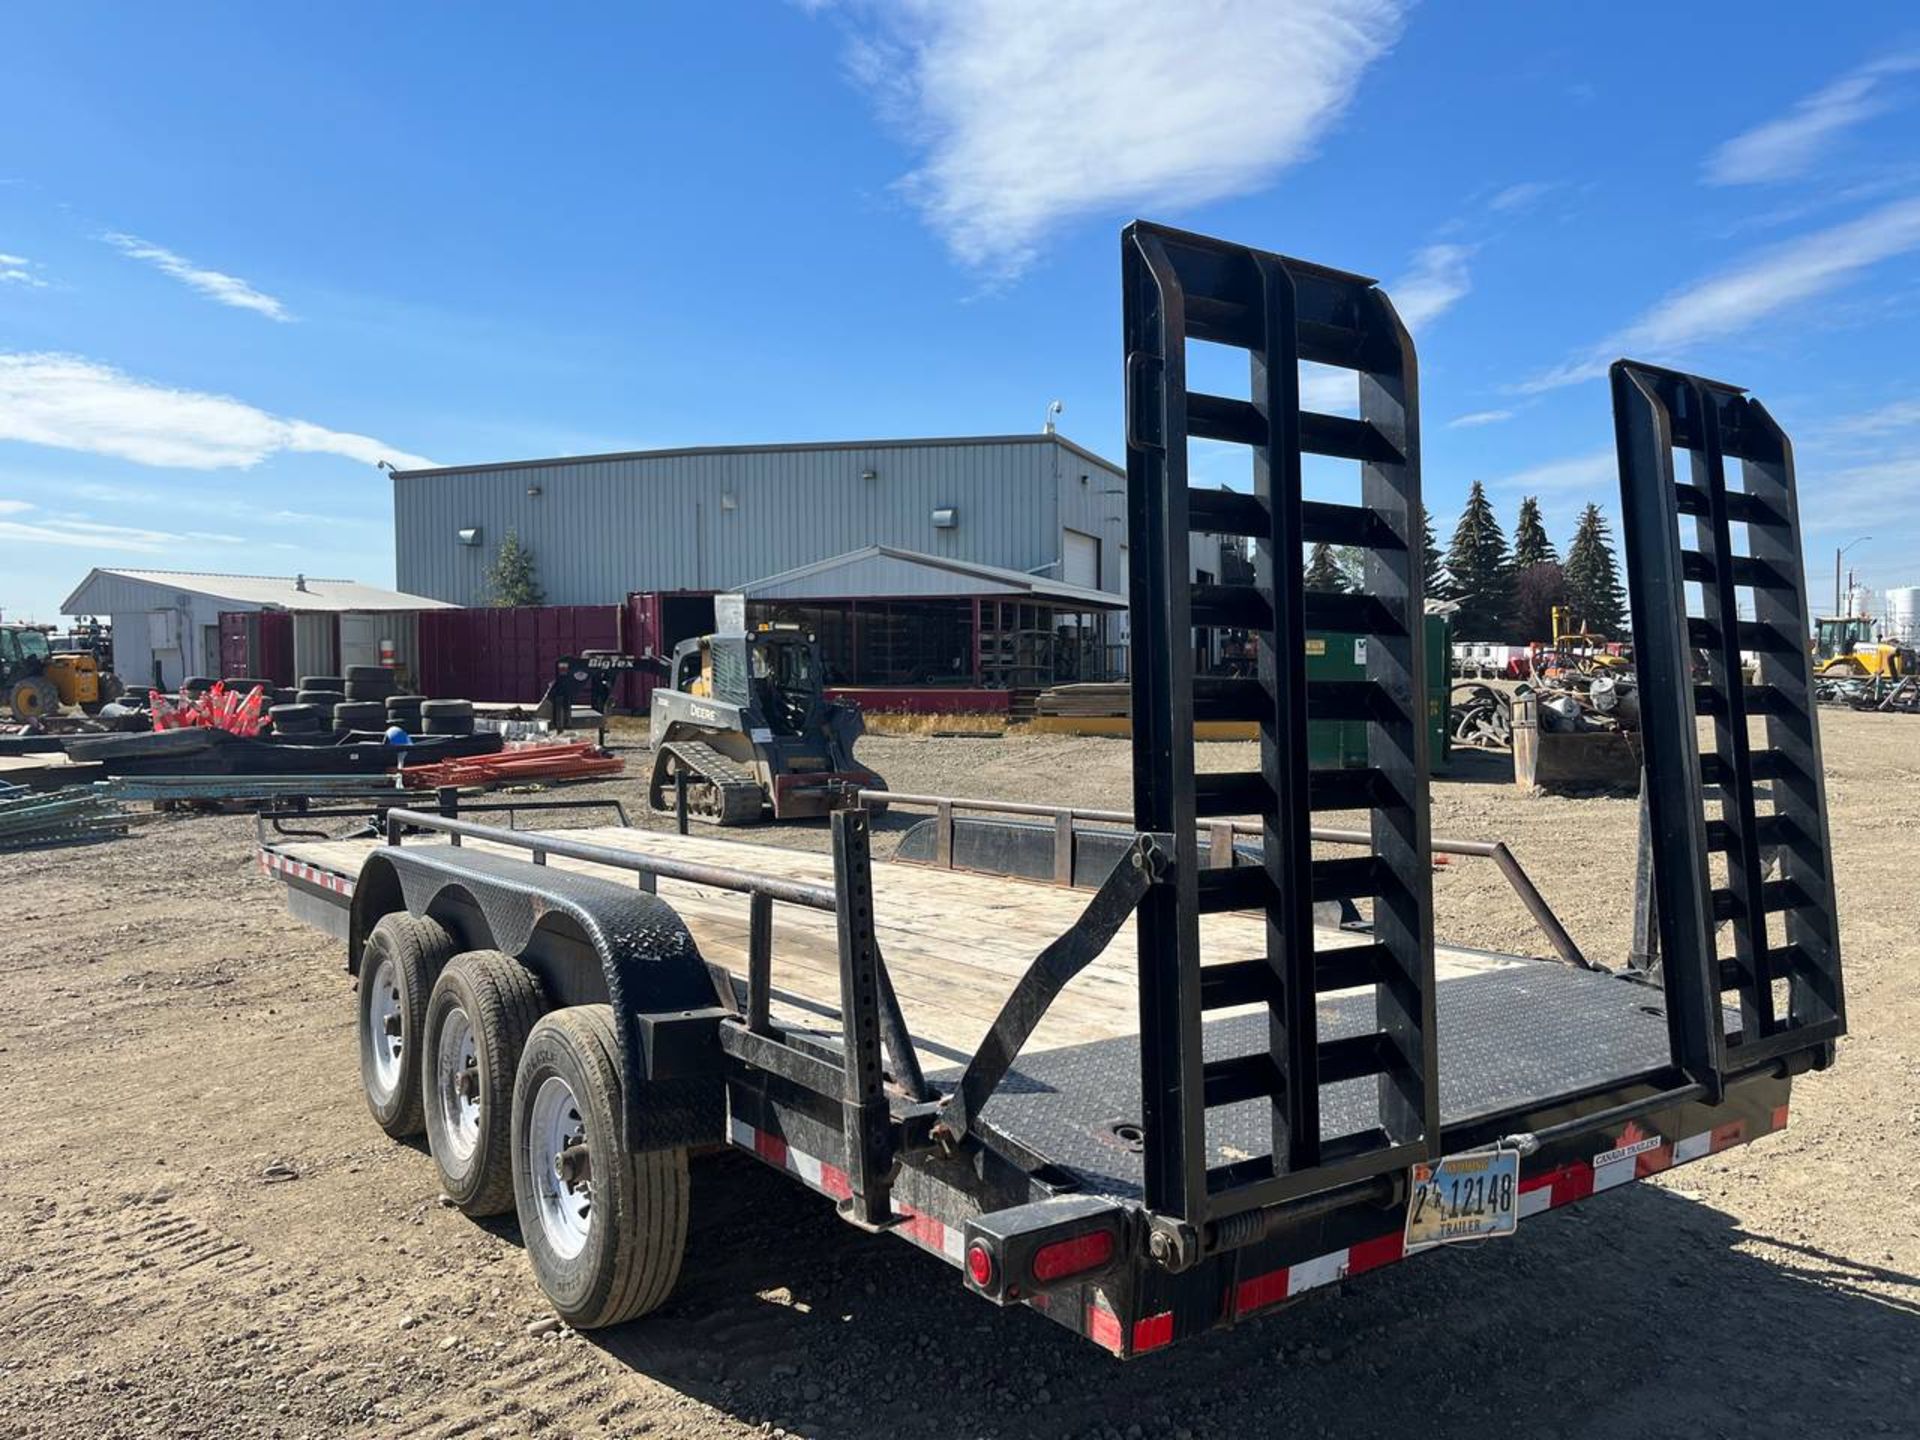 2018 Canada Trailers Manufacturing Ltd Equipment trailer - Image 2 of 5